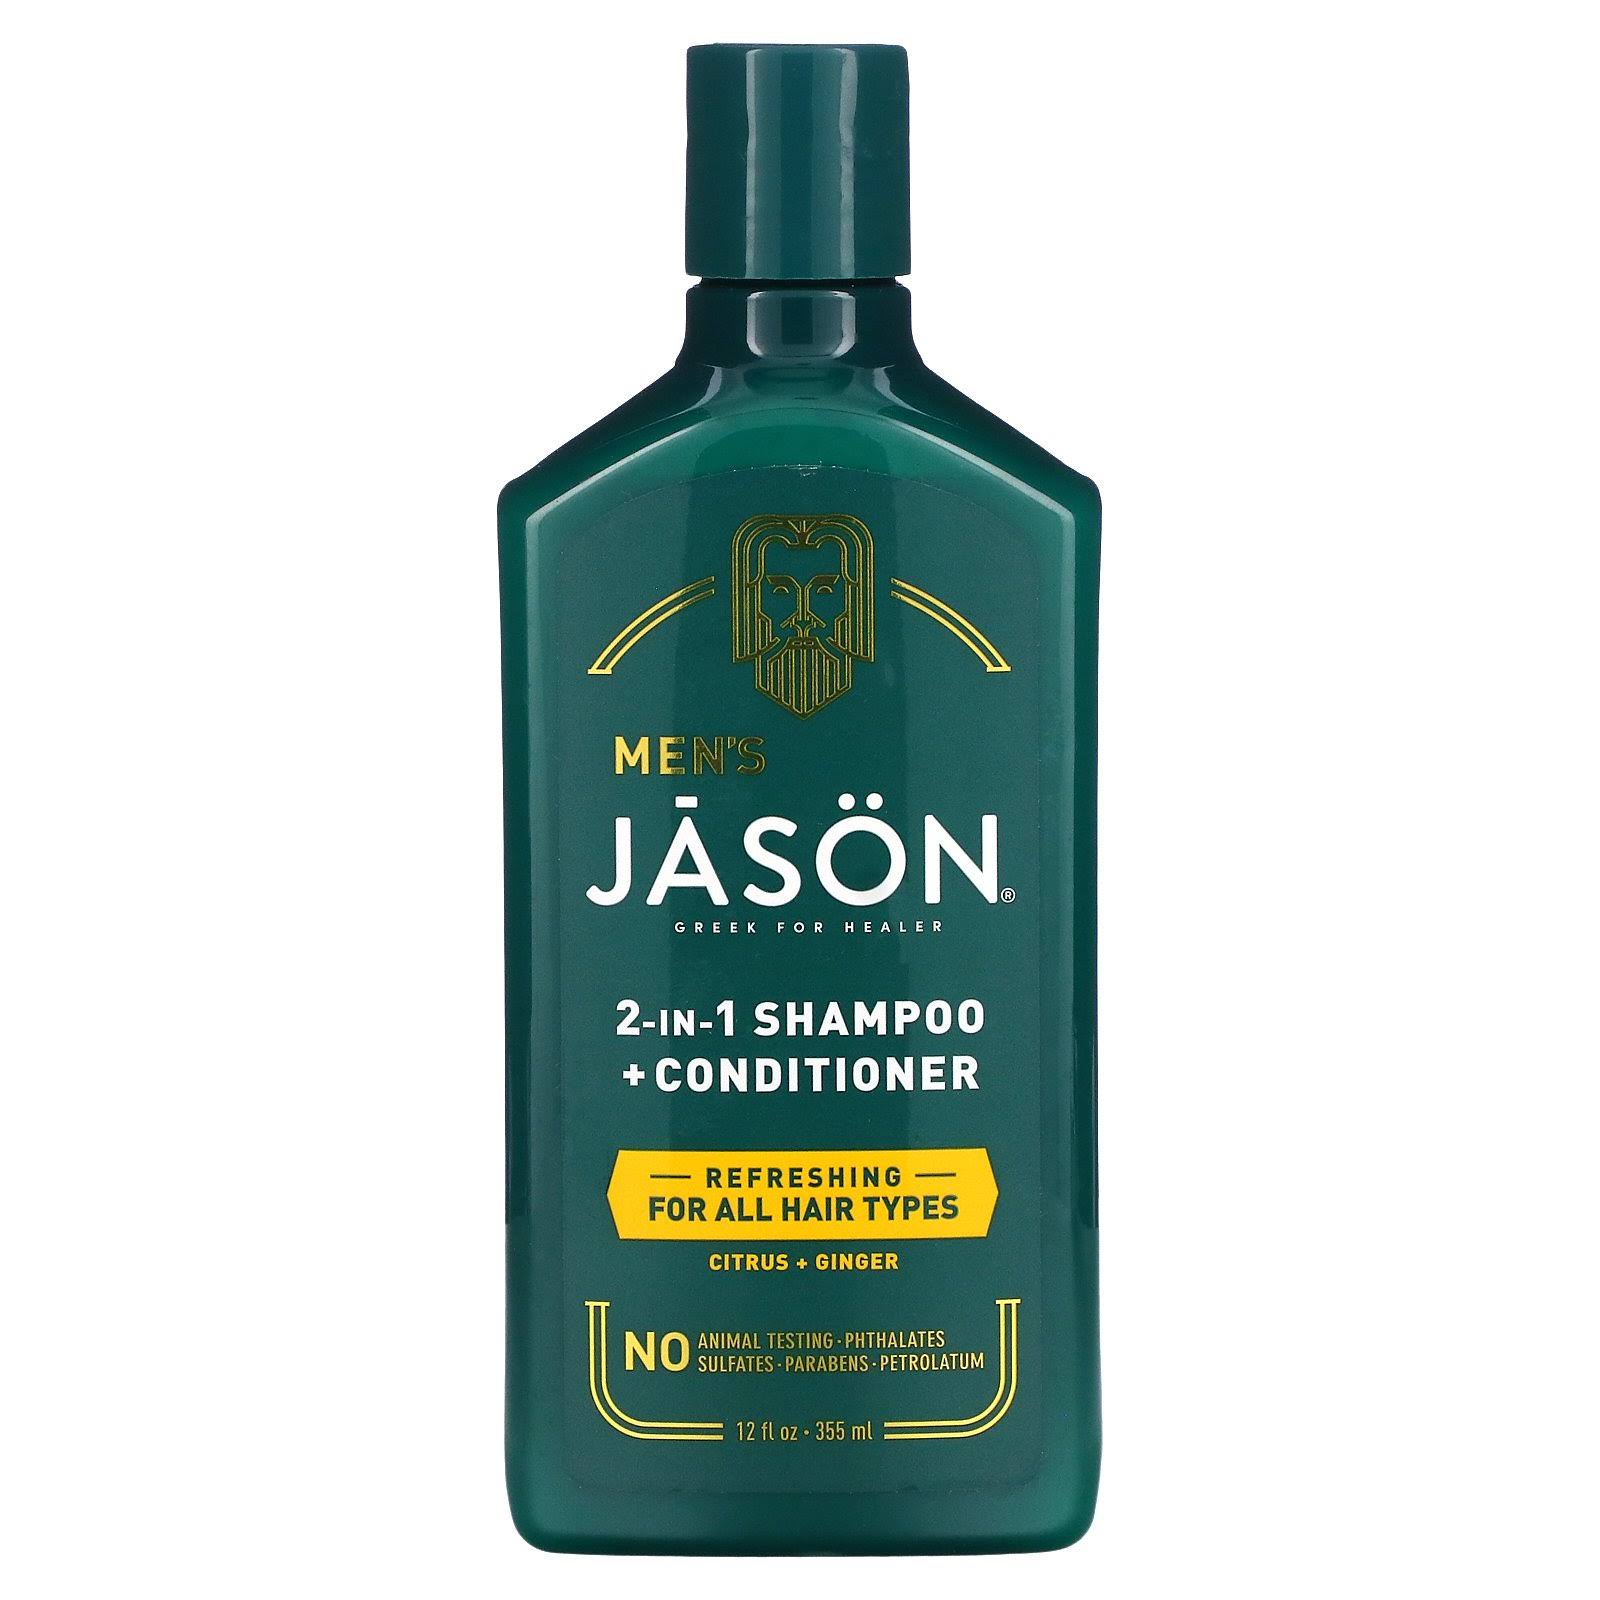 Jason Shampoo + Conditioner, 2-in-1, Citrus + Ginger, Men's - 12 fl oz